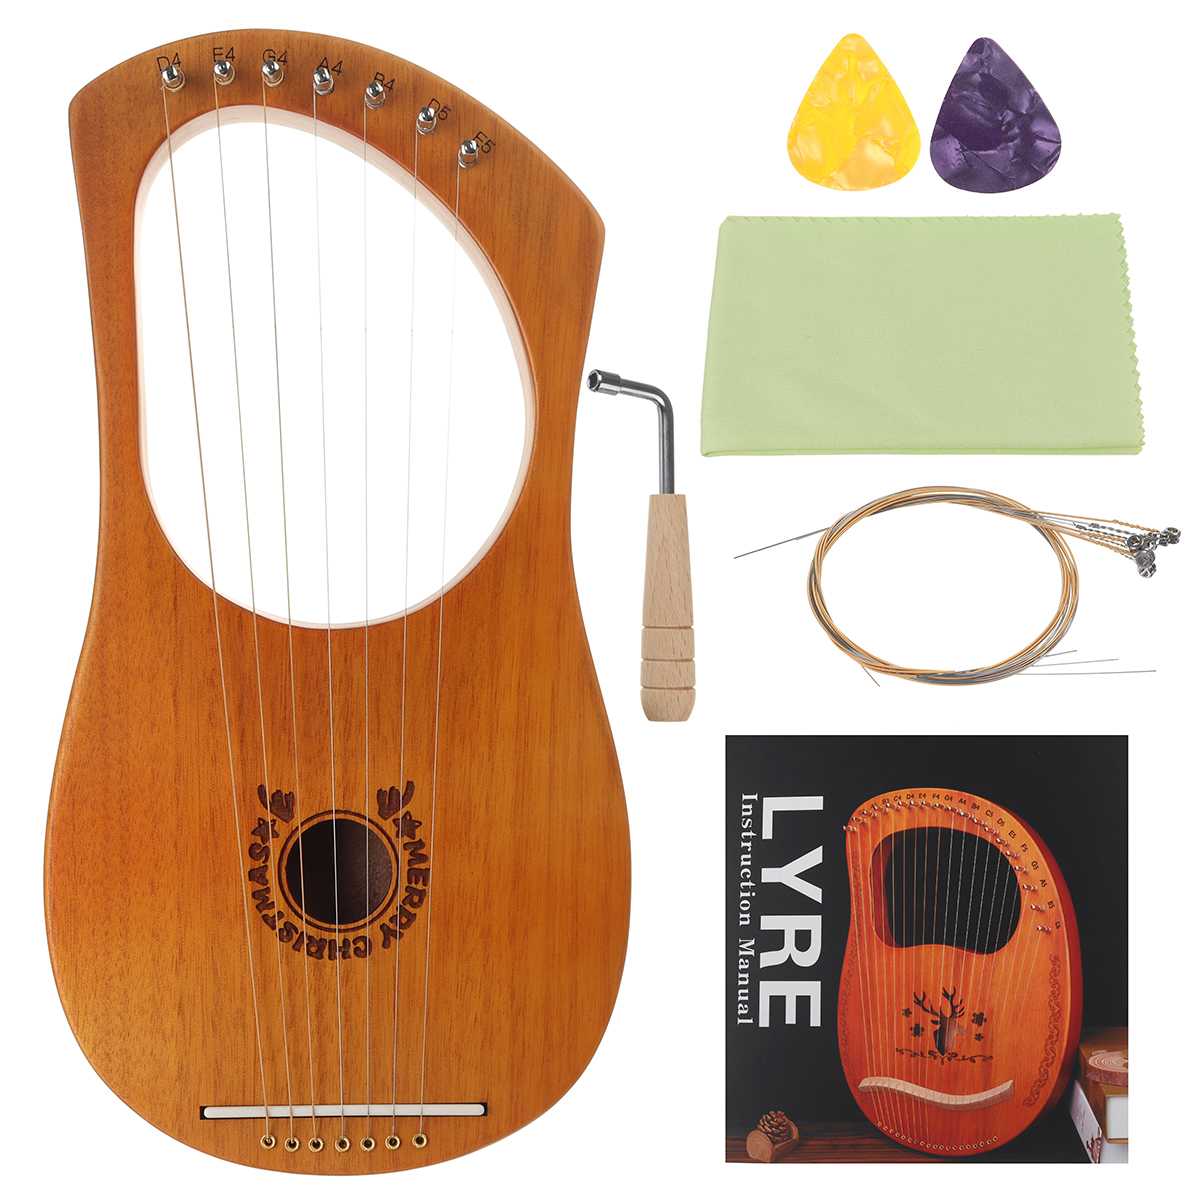 Træ mahogni 7 -strenget lyre harpe strenge musikinstrument med pickup tuning hammer rengøringsklud harpe instrument: Gevir lysebrun